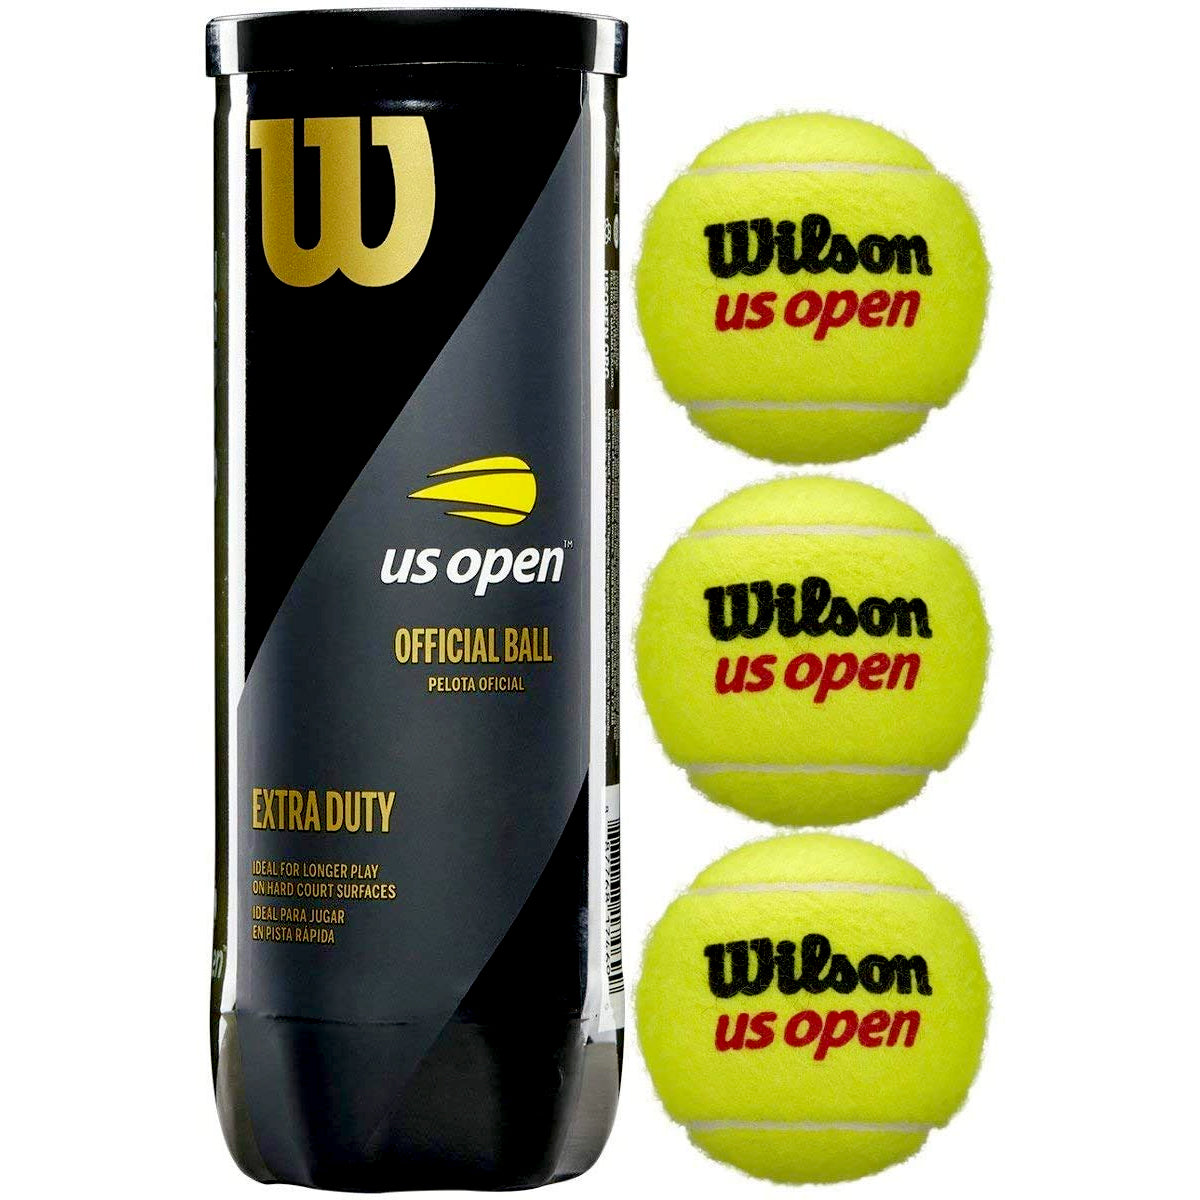 Wilson US Open Extra Duty Tennis Balls (16 Cans) - Best Price online Prokicksports.com